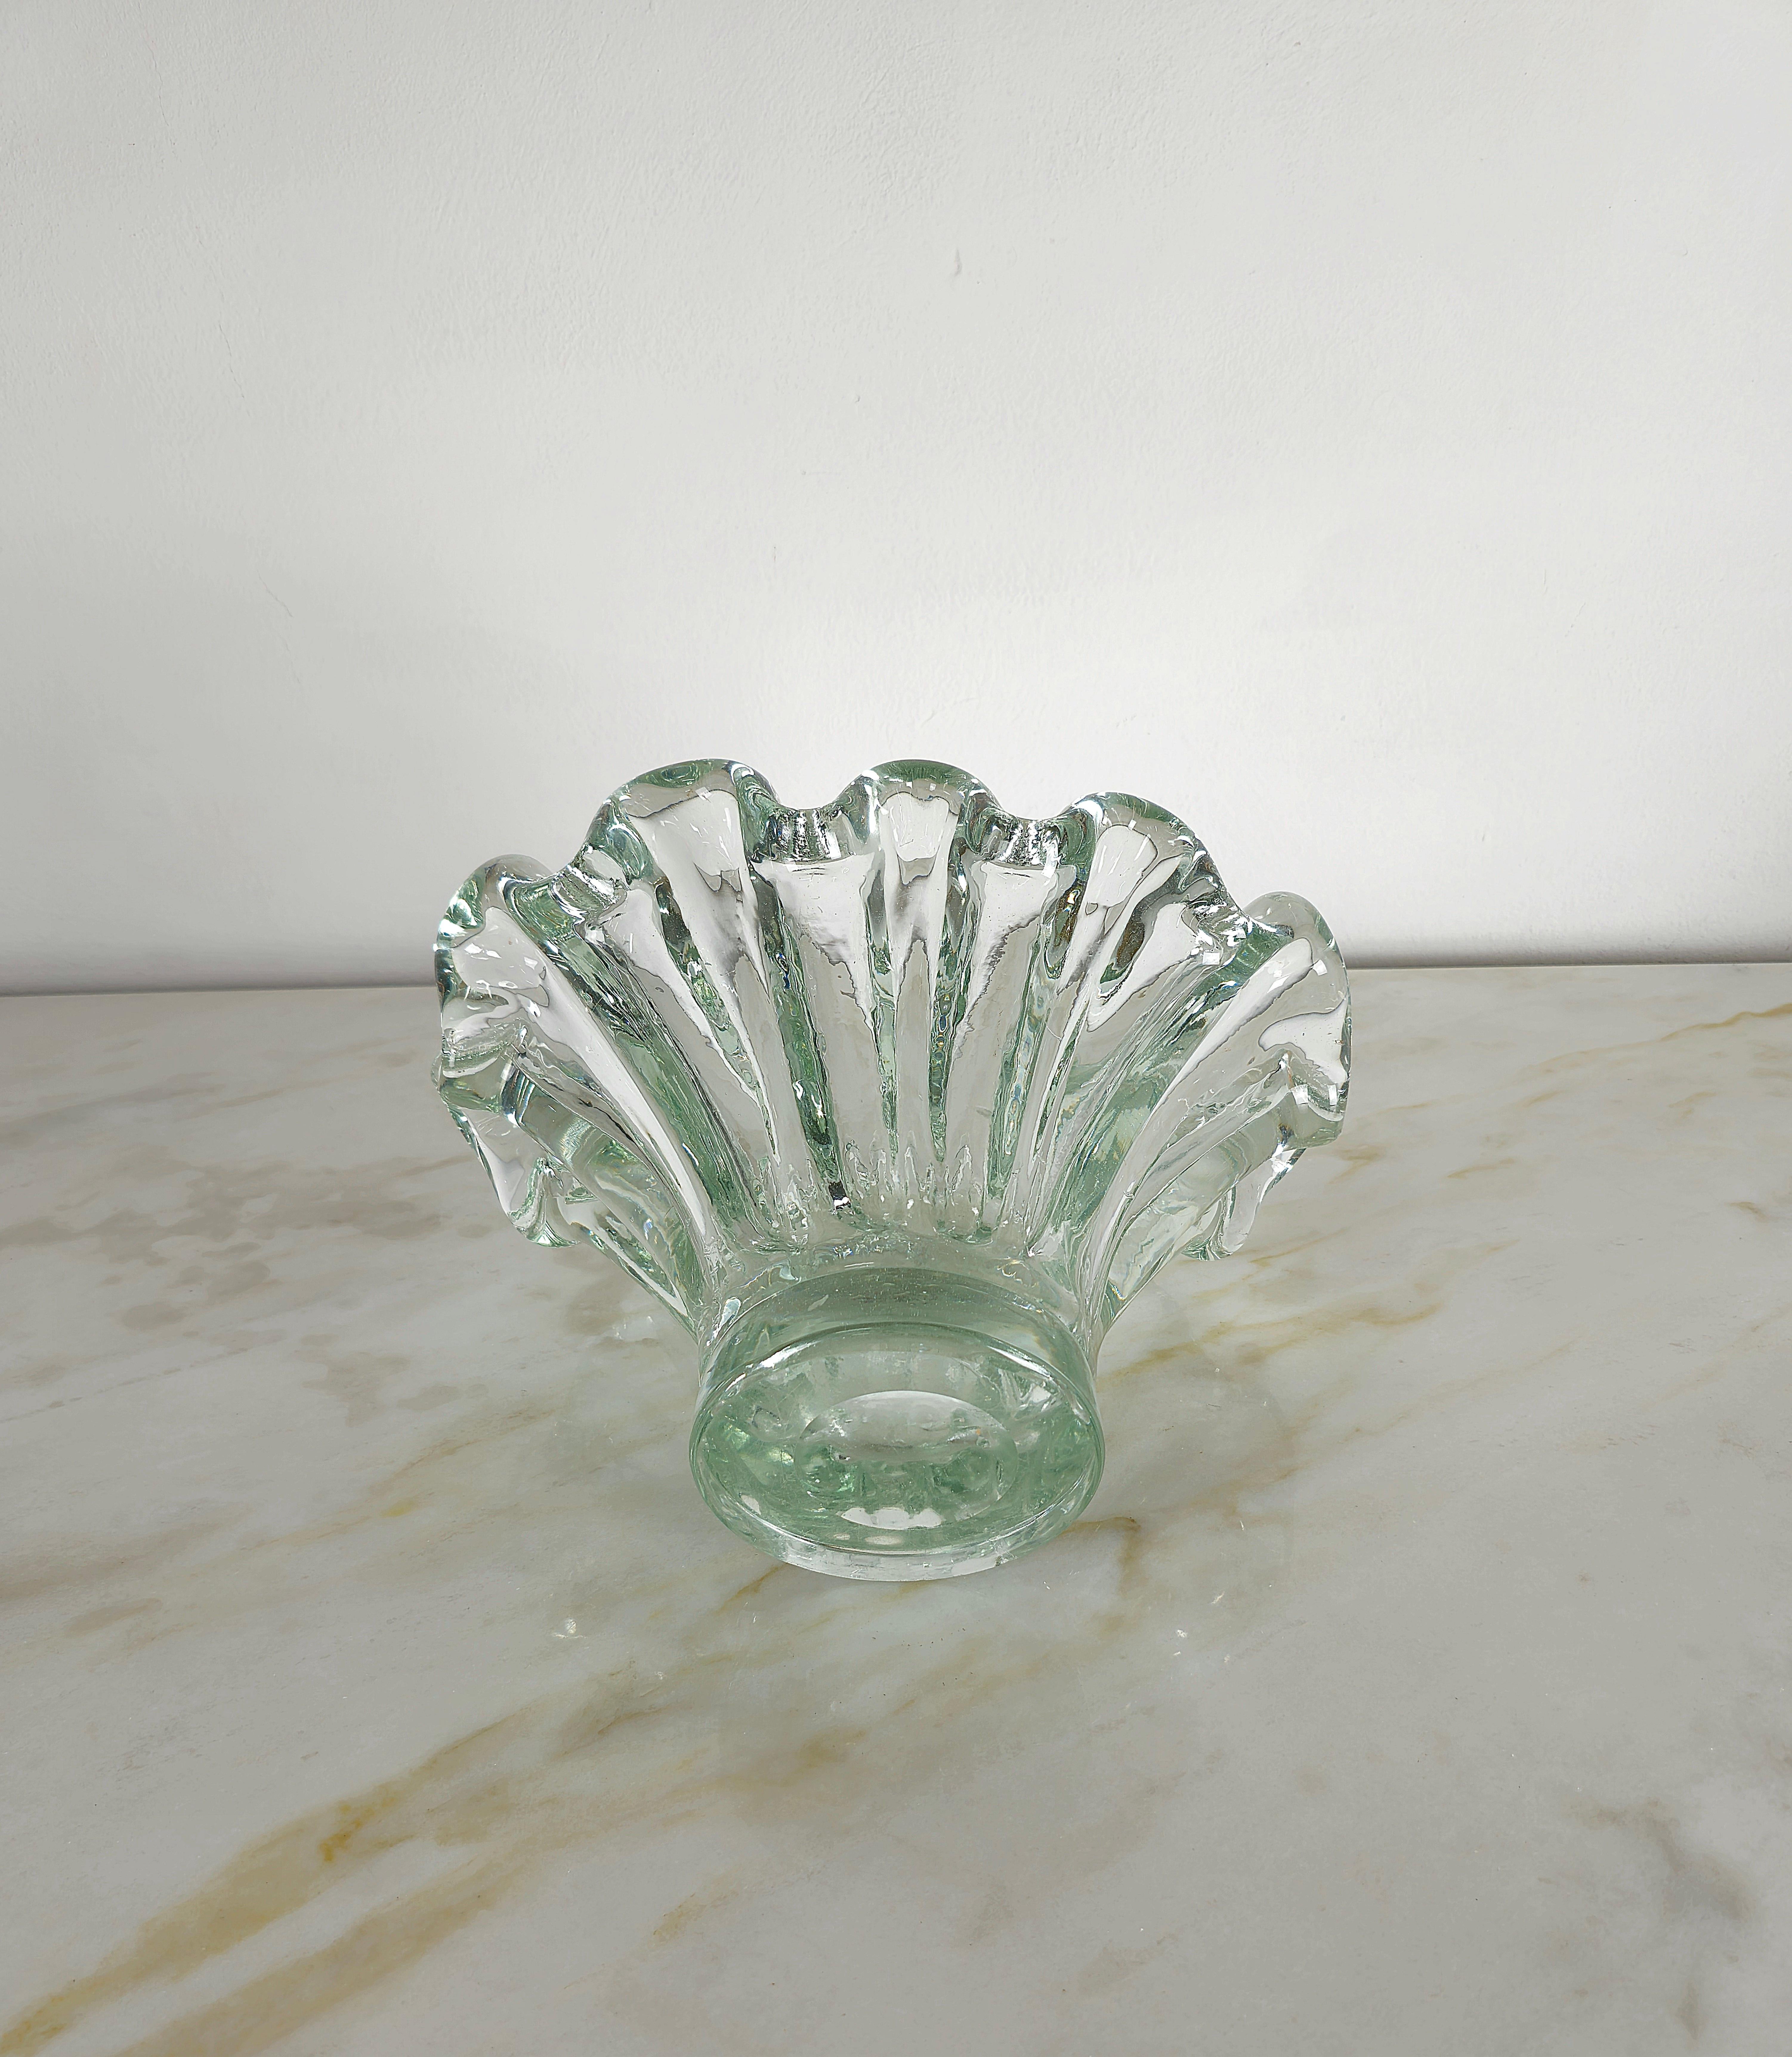 Vase Decorative Object Transparent Murano Glass Large Midcentury Italy 1960s 4